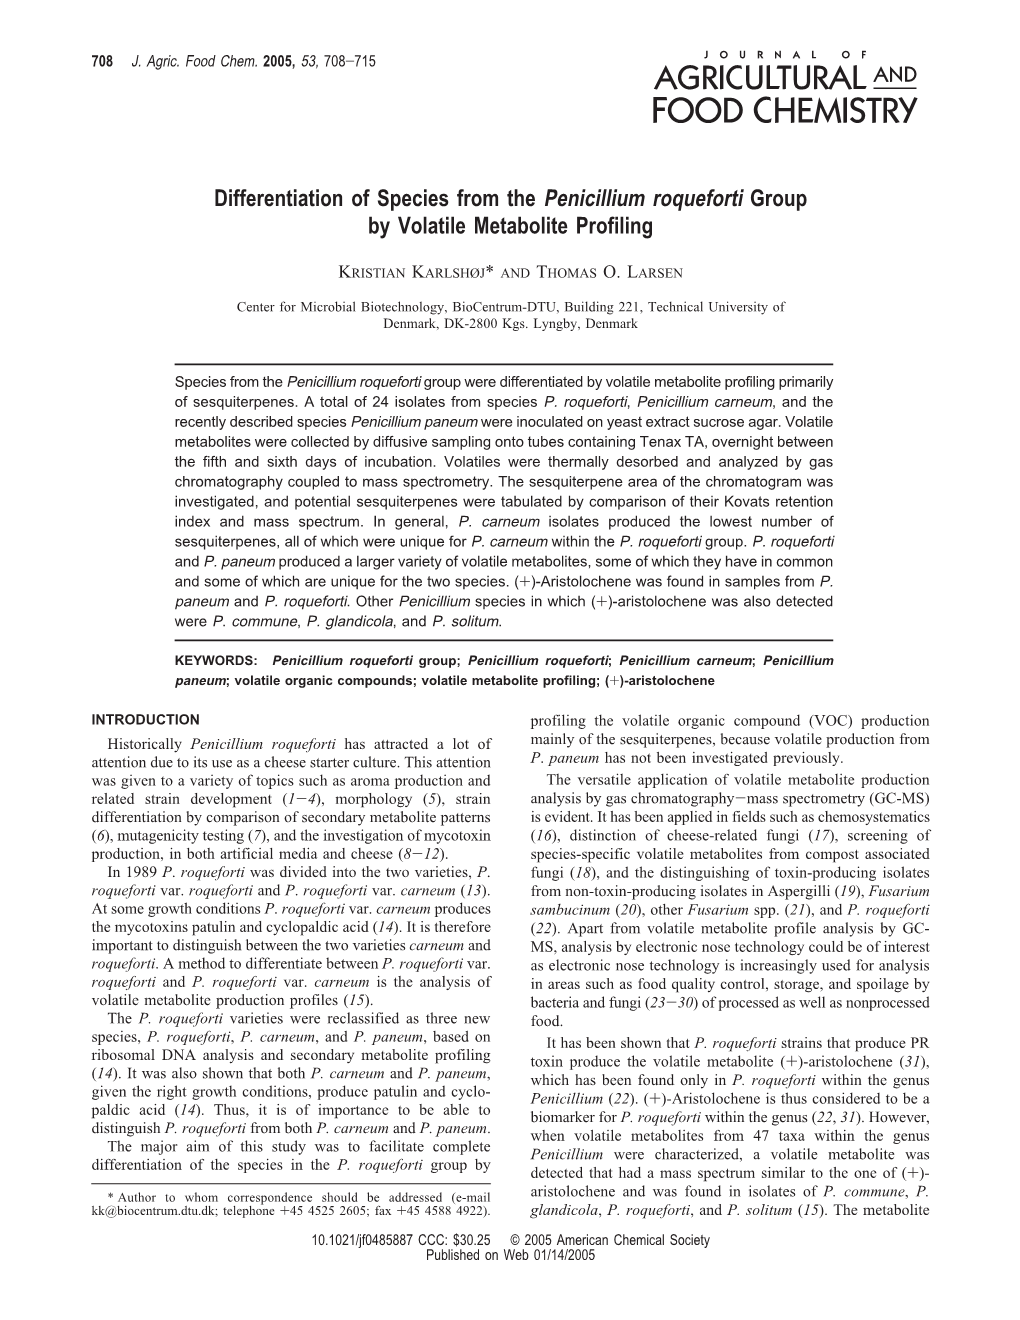 Differentiation of Species from the Penicillium Roqueforti Group by Volatile Metabolite Profiling